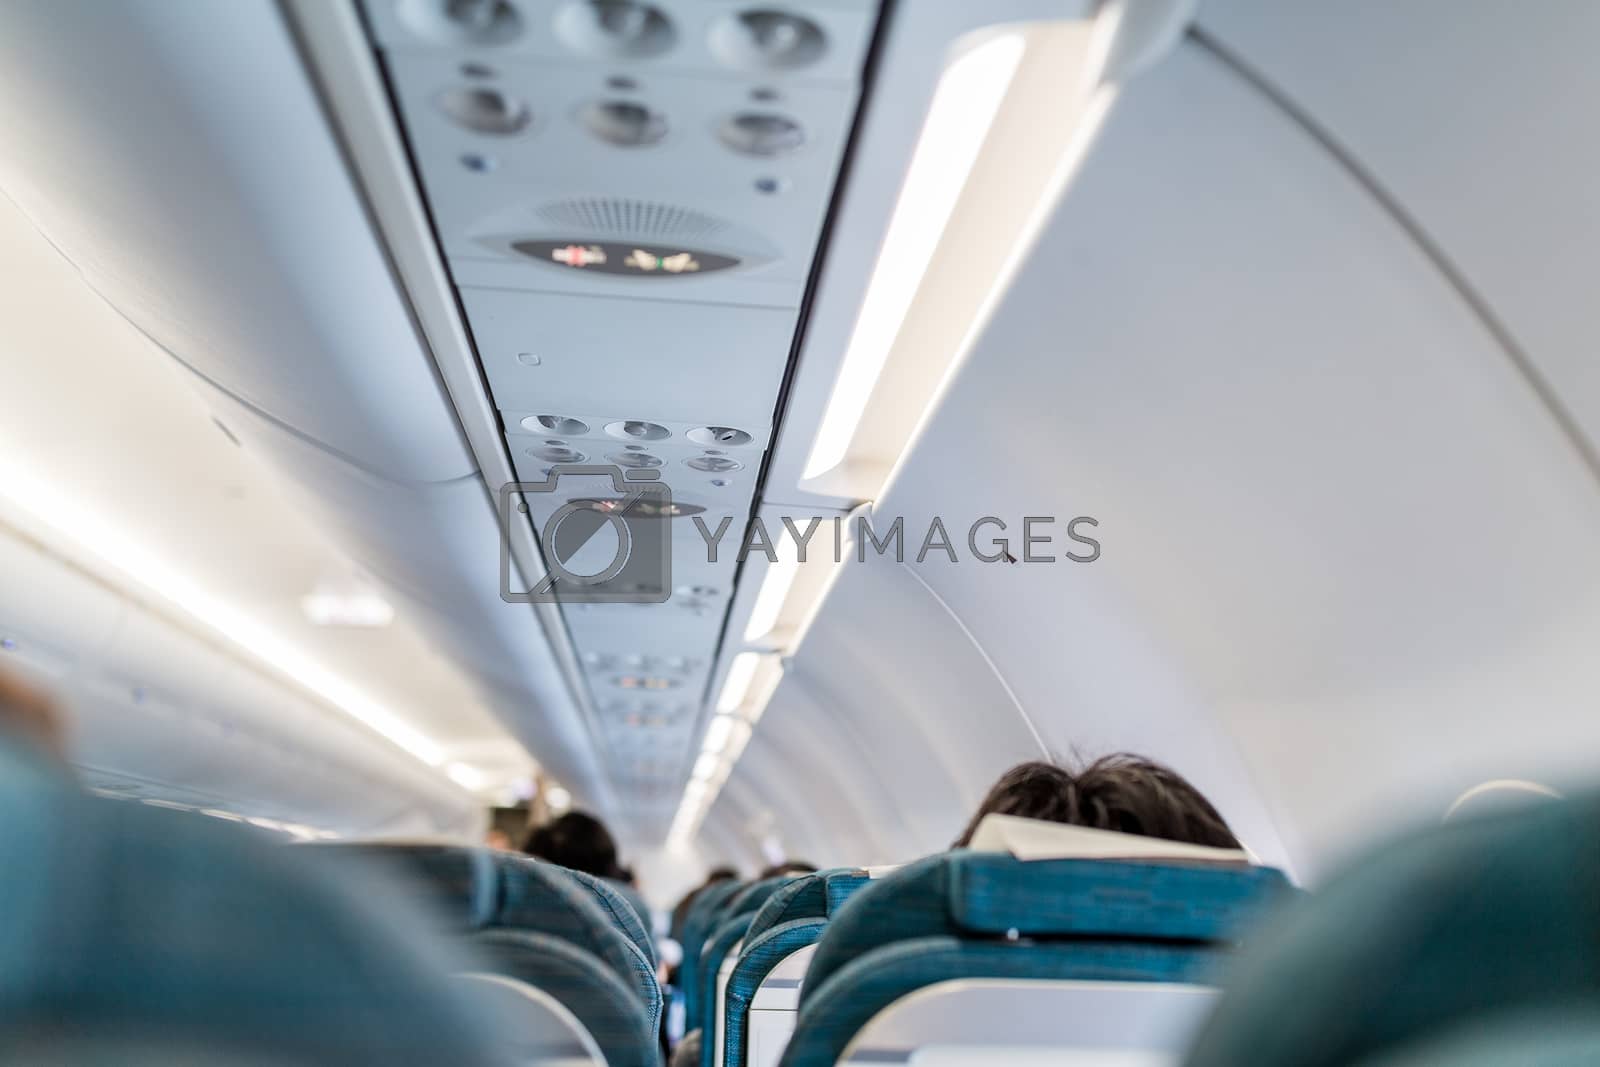 Royalty free image of Interior of Aircraft by leungchopan